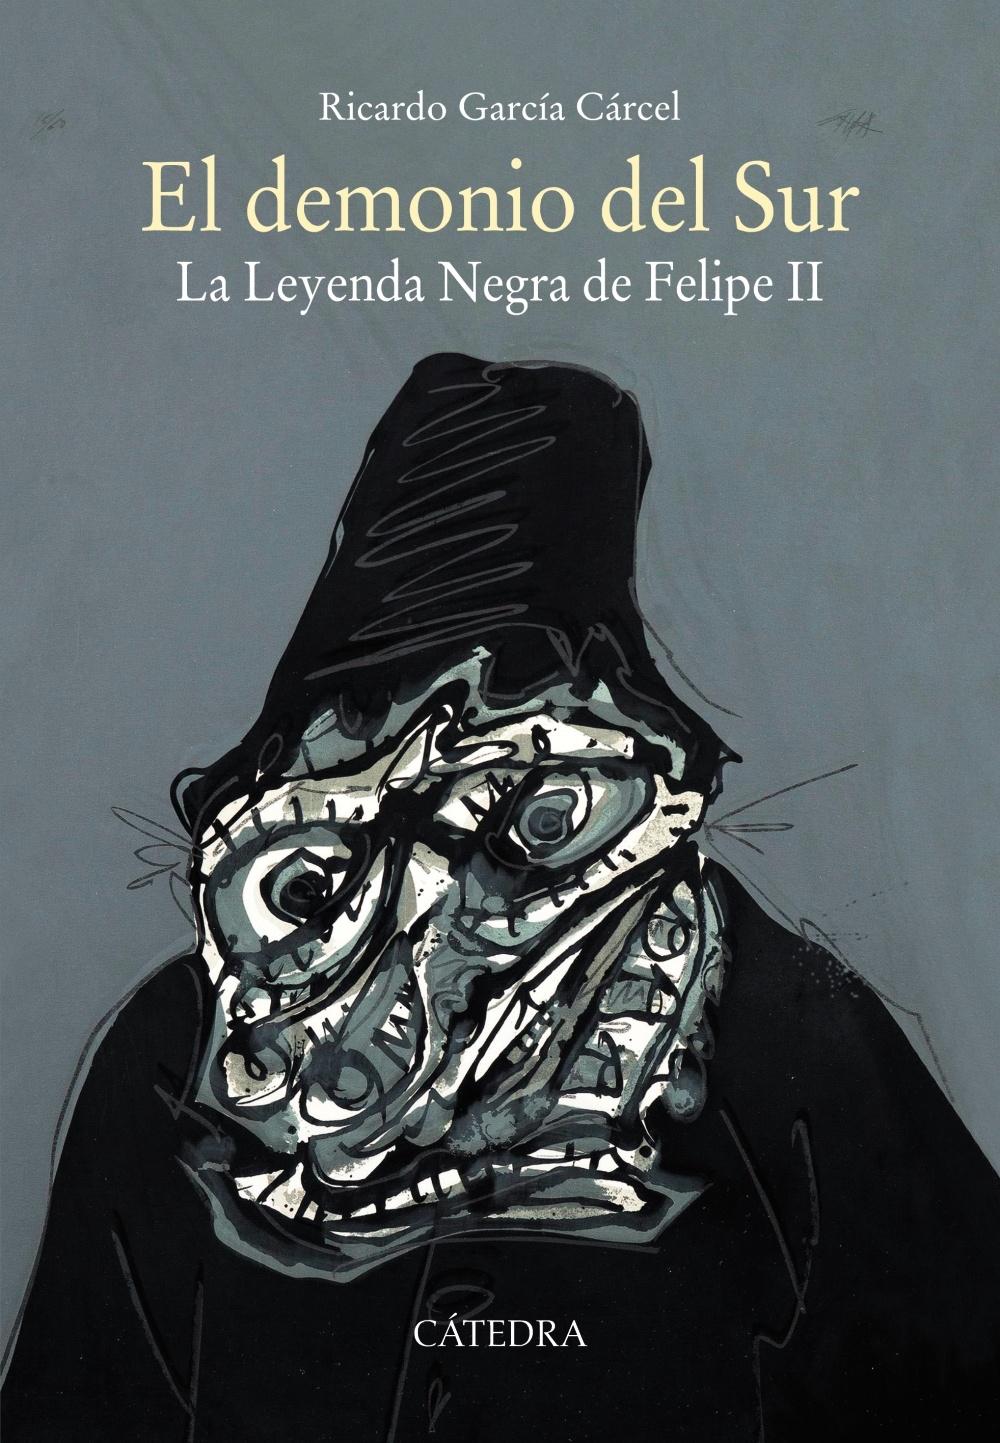 El demonio del Sur "La Leyenda Negra de Felipe II". 